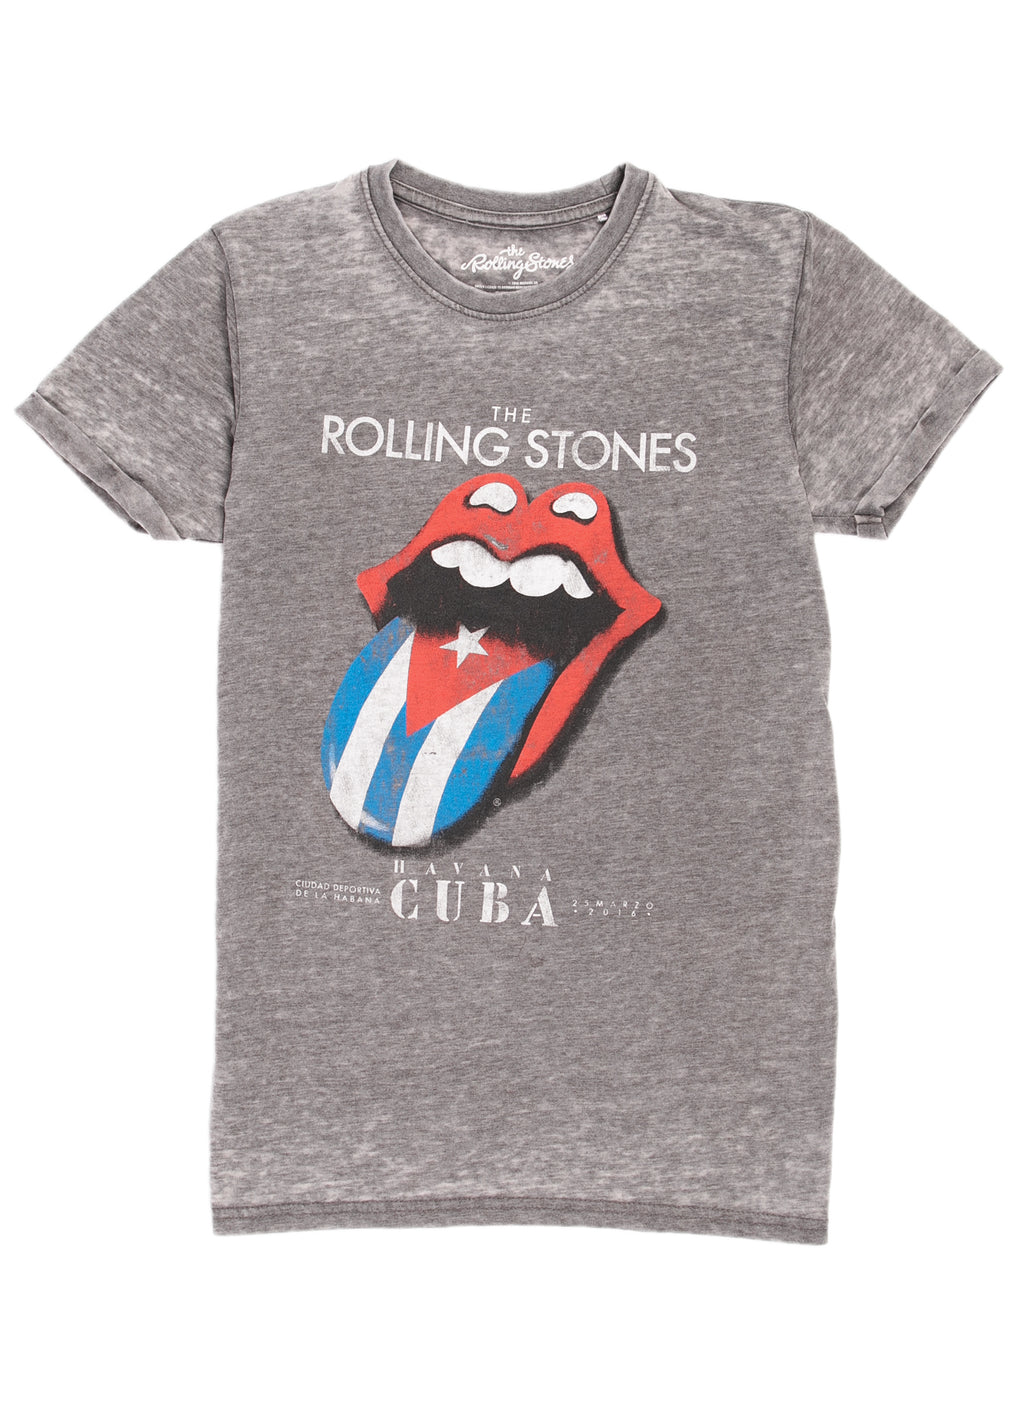 Black Candy - Stones Los \'78 Angeles Tour - Rolling – Tongue T-Shirt Logo Eye